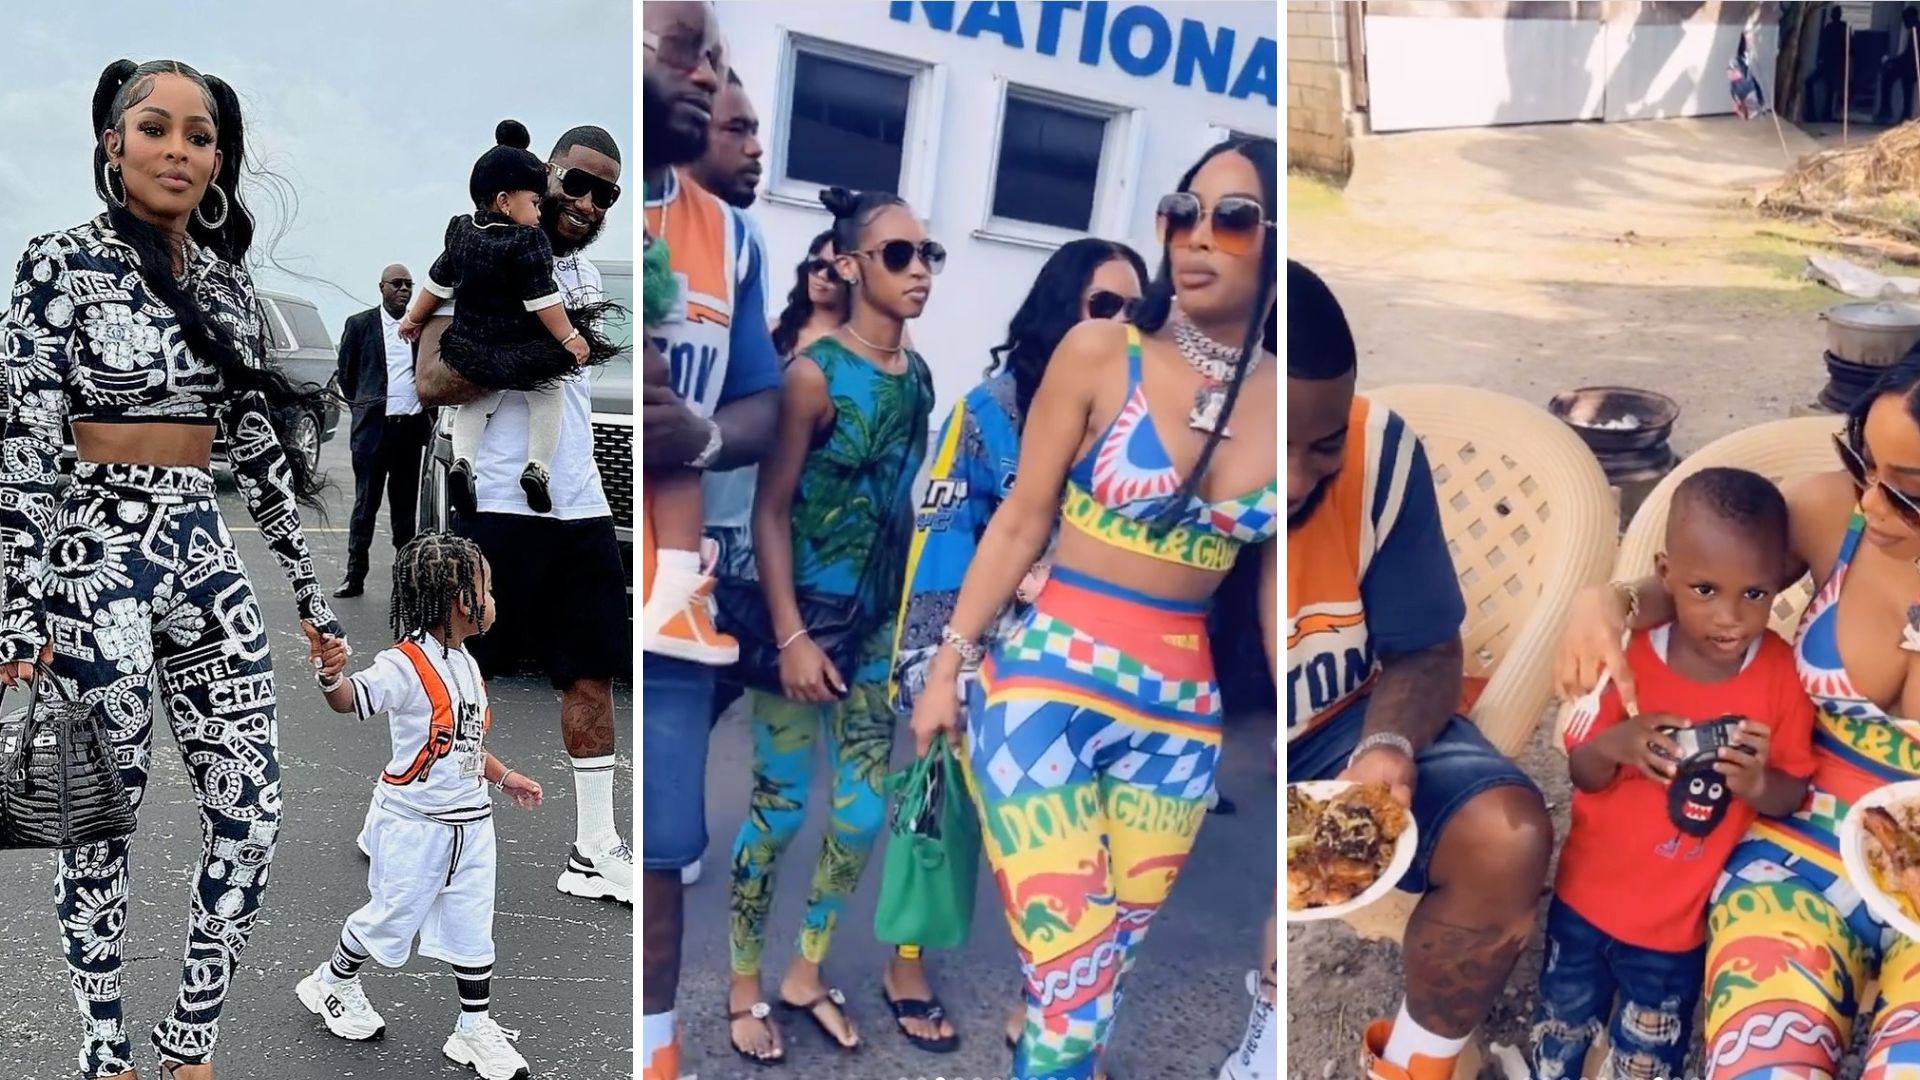 Gucci Mane and Keyshia Ka'Oir Having Fun in Jamaica, Big Birthday  Celebration – See Pics and Watch Videos – YARDHYPE